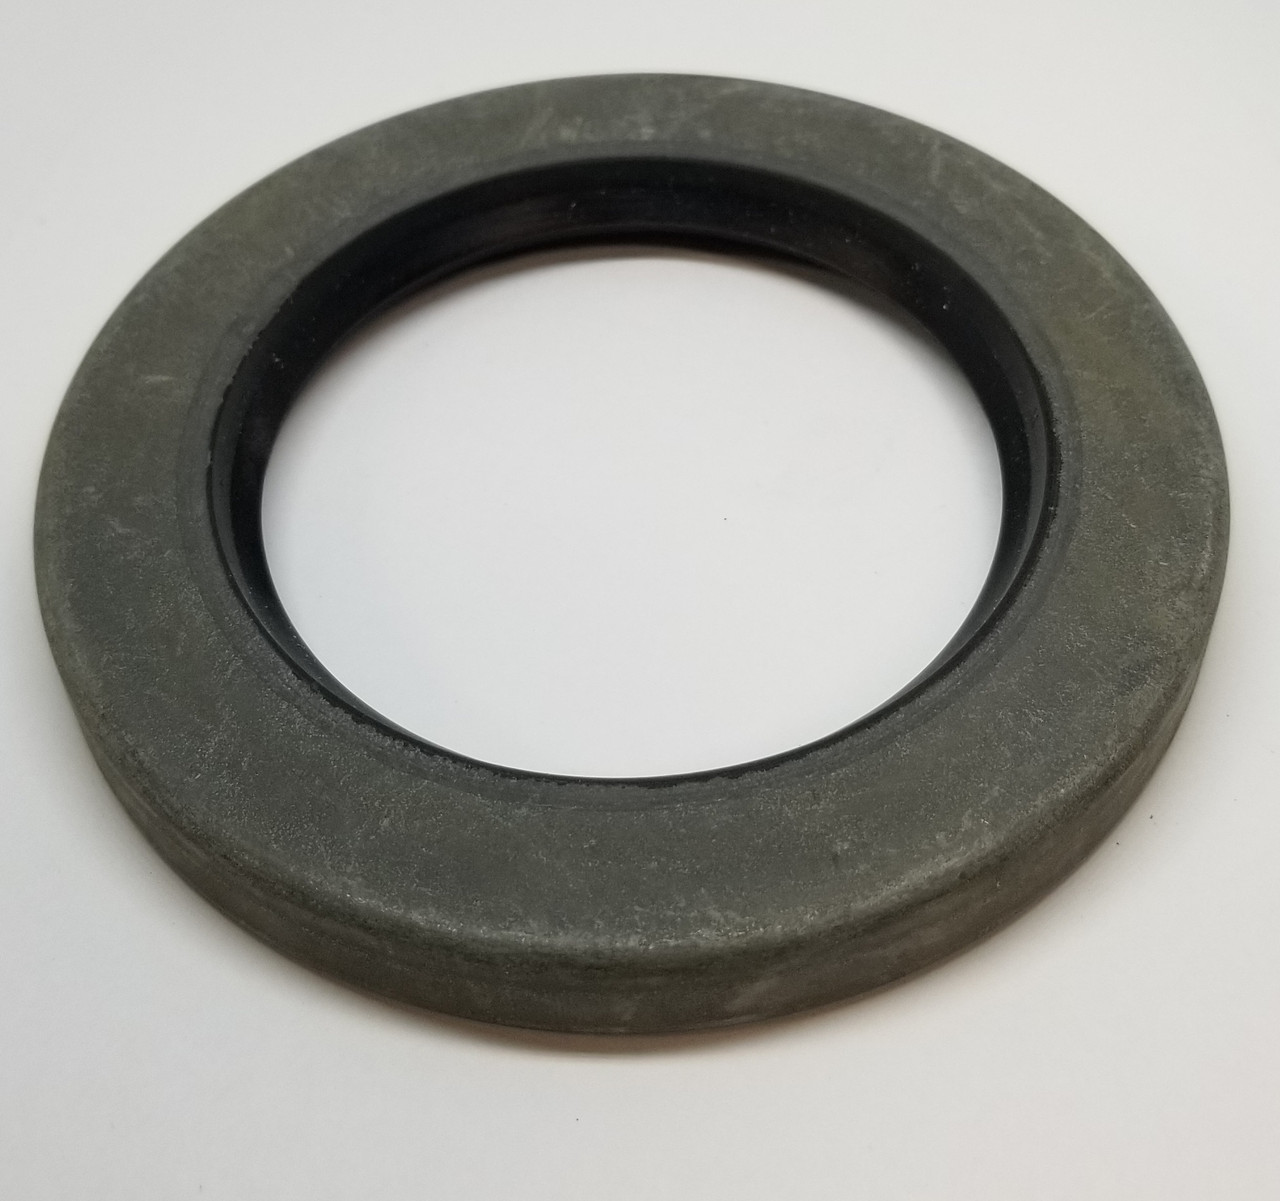 8.250" (209.55mm) Inch Reinforced Metal Single Lip Nitrile Oil Seal  82560 CRWH1 R